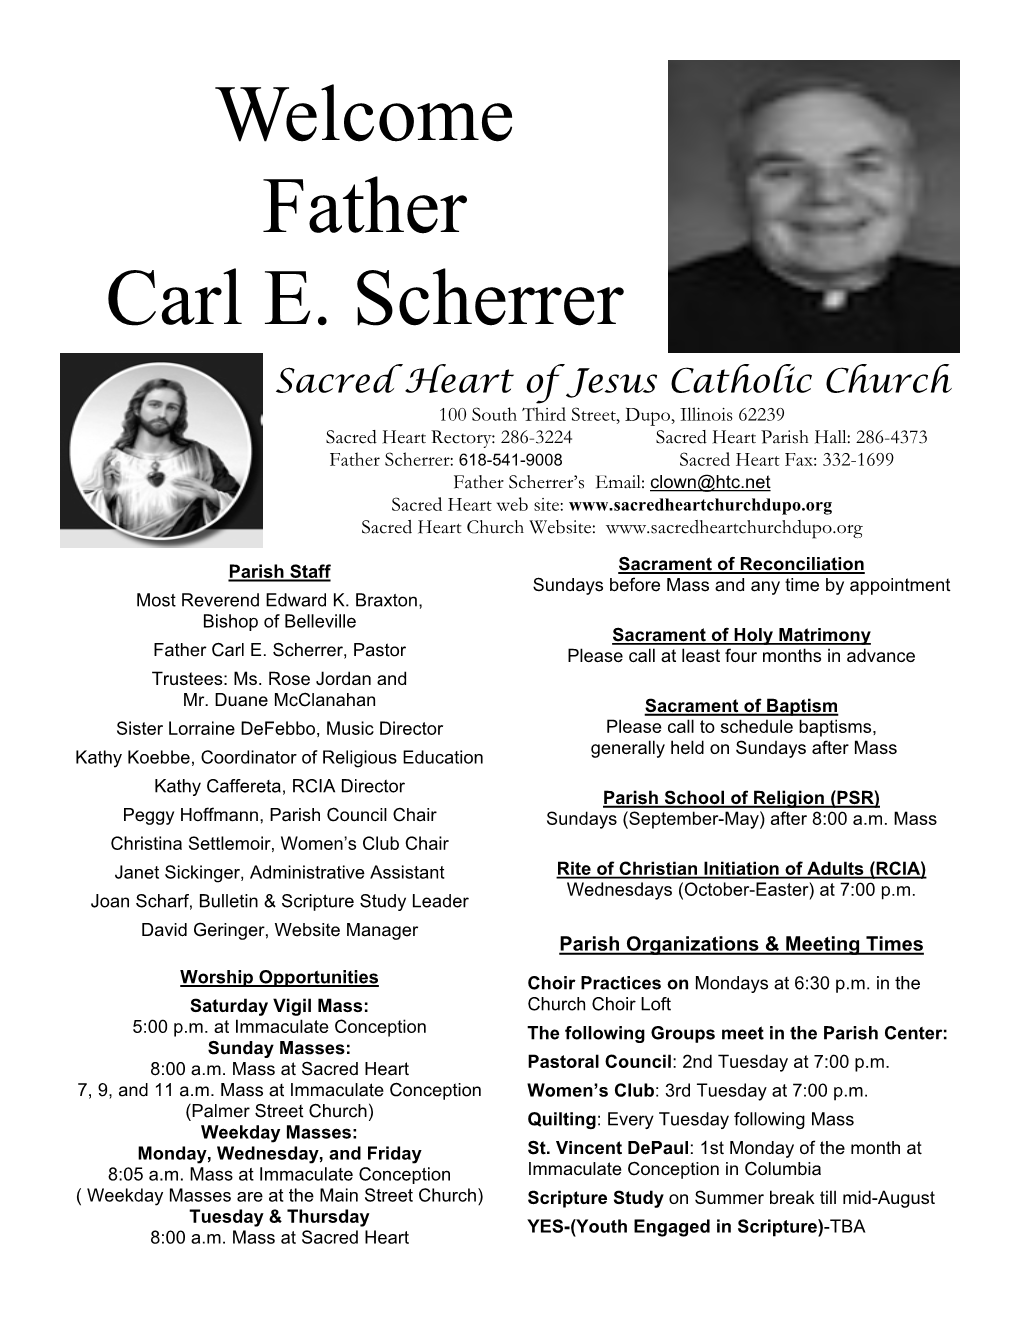 Welcome Father Carl E. Scherrer